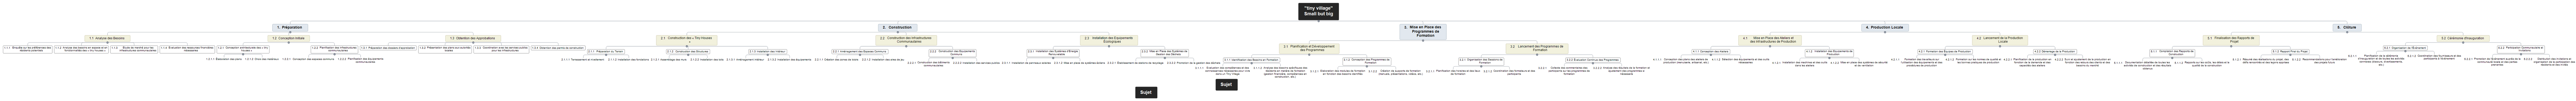 tiny village          Small but big Mind Maps